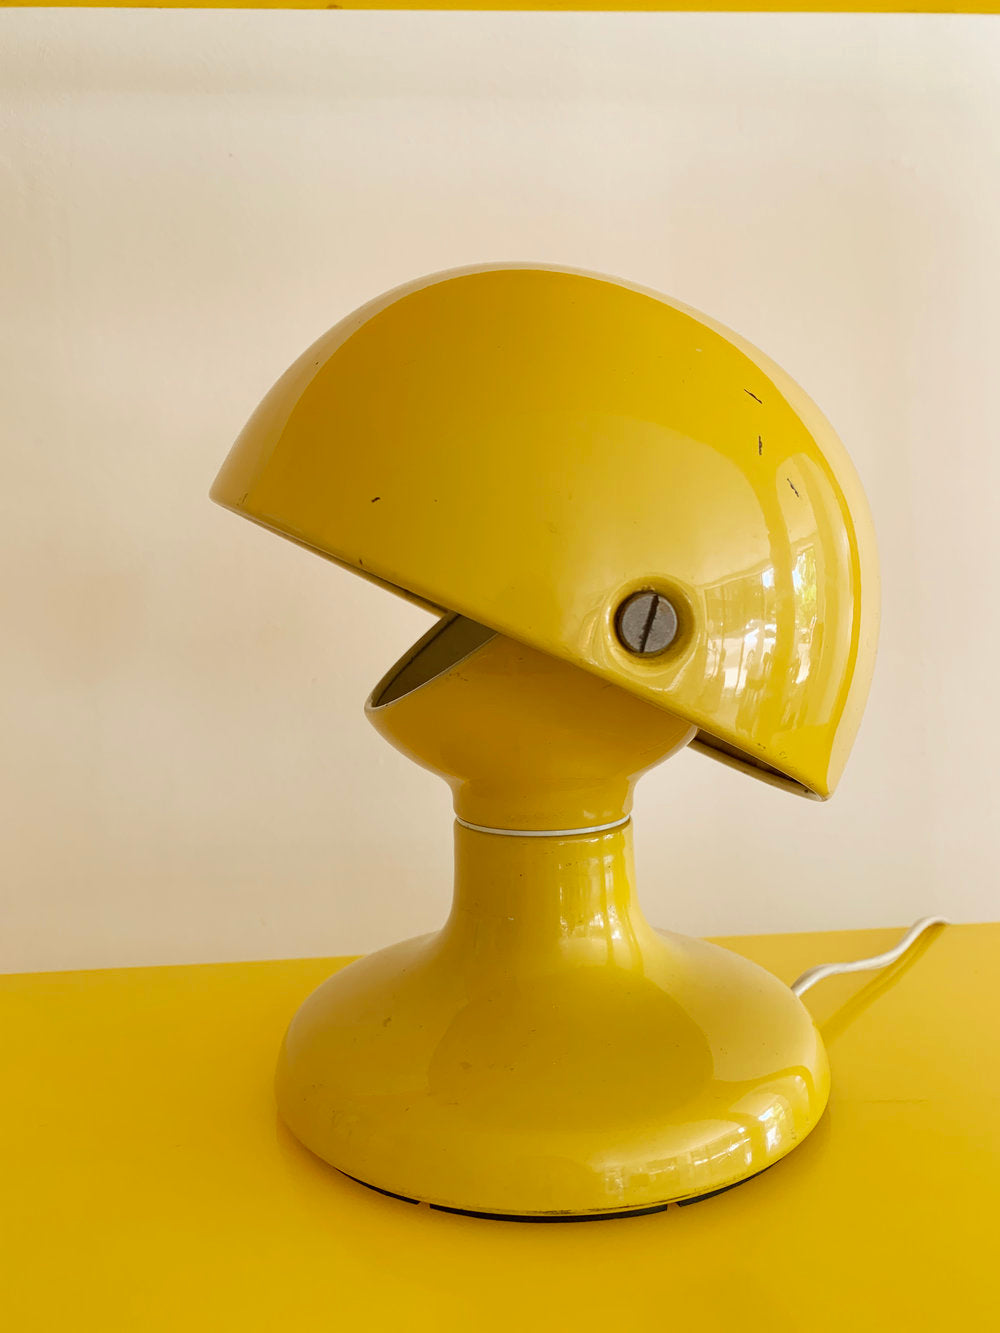 Rare Yellow Flos 1963 “Jucker” Lamp by Tobia Scarpa